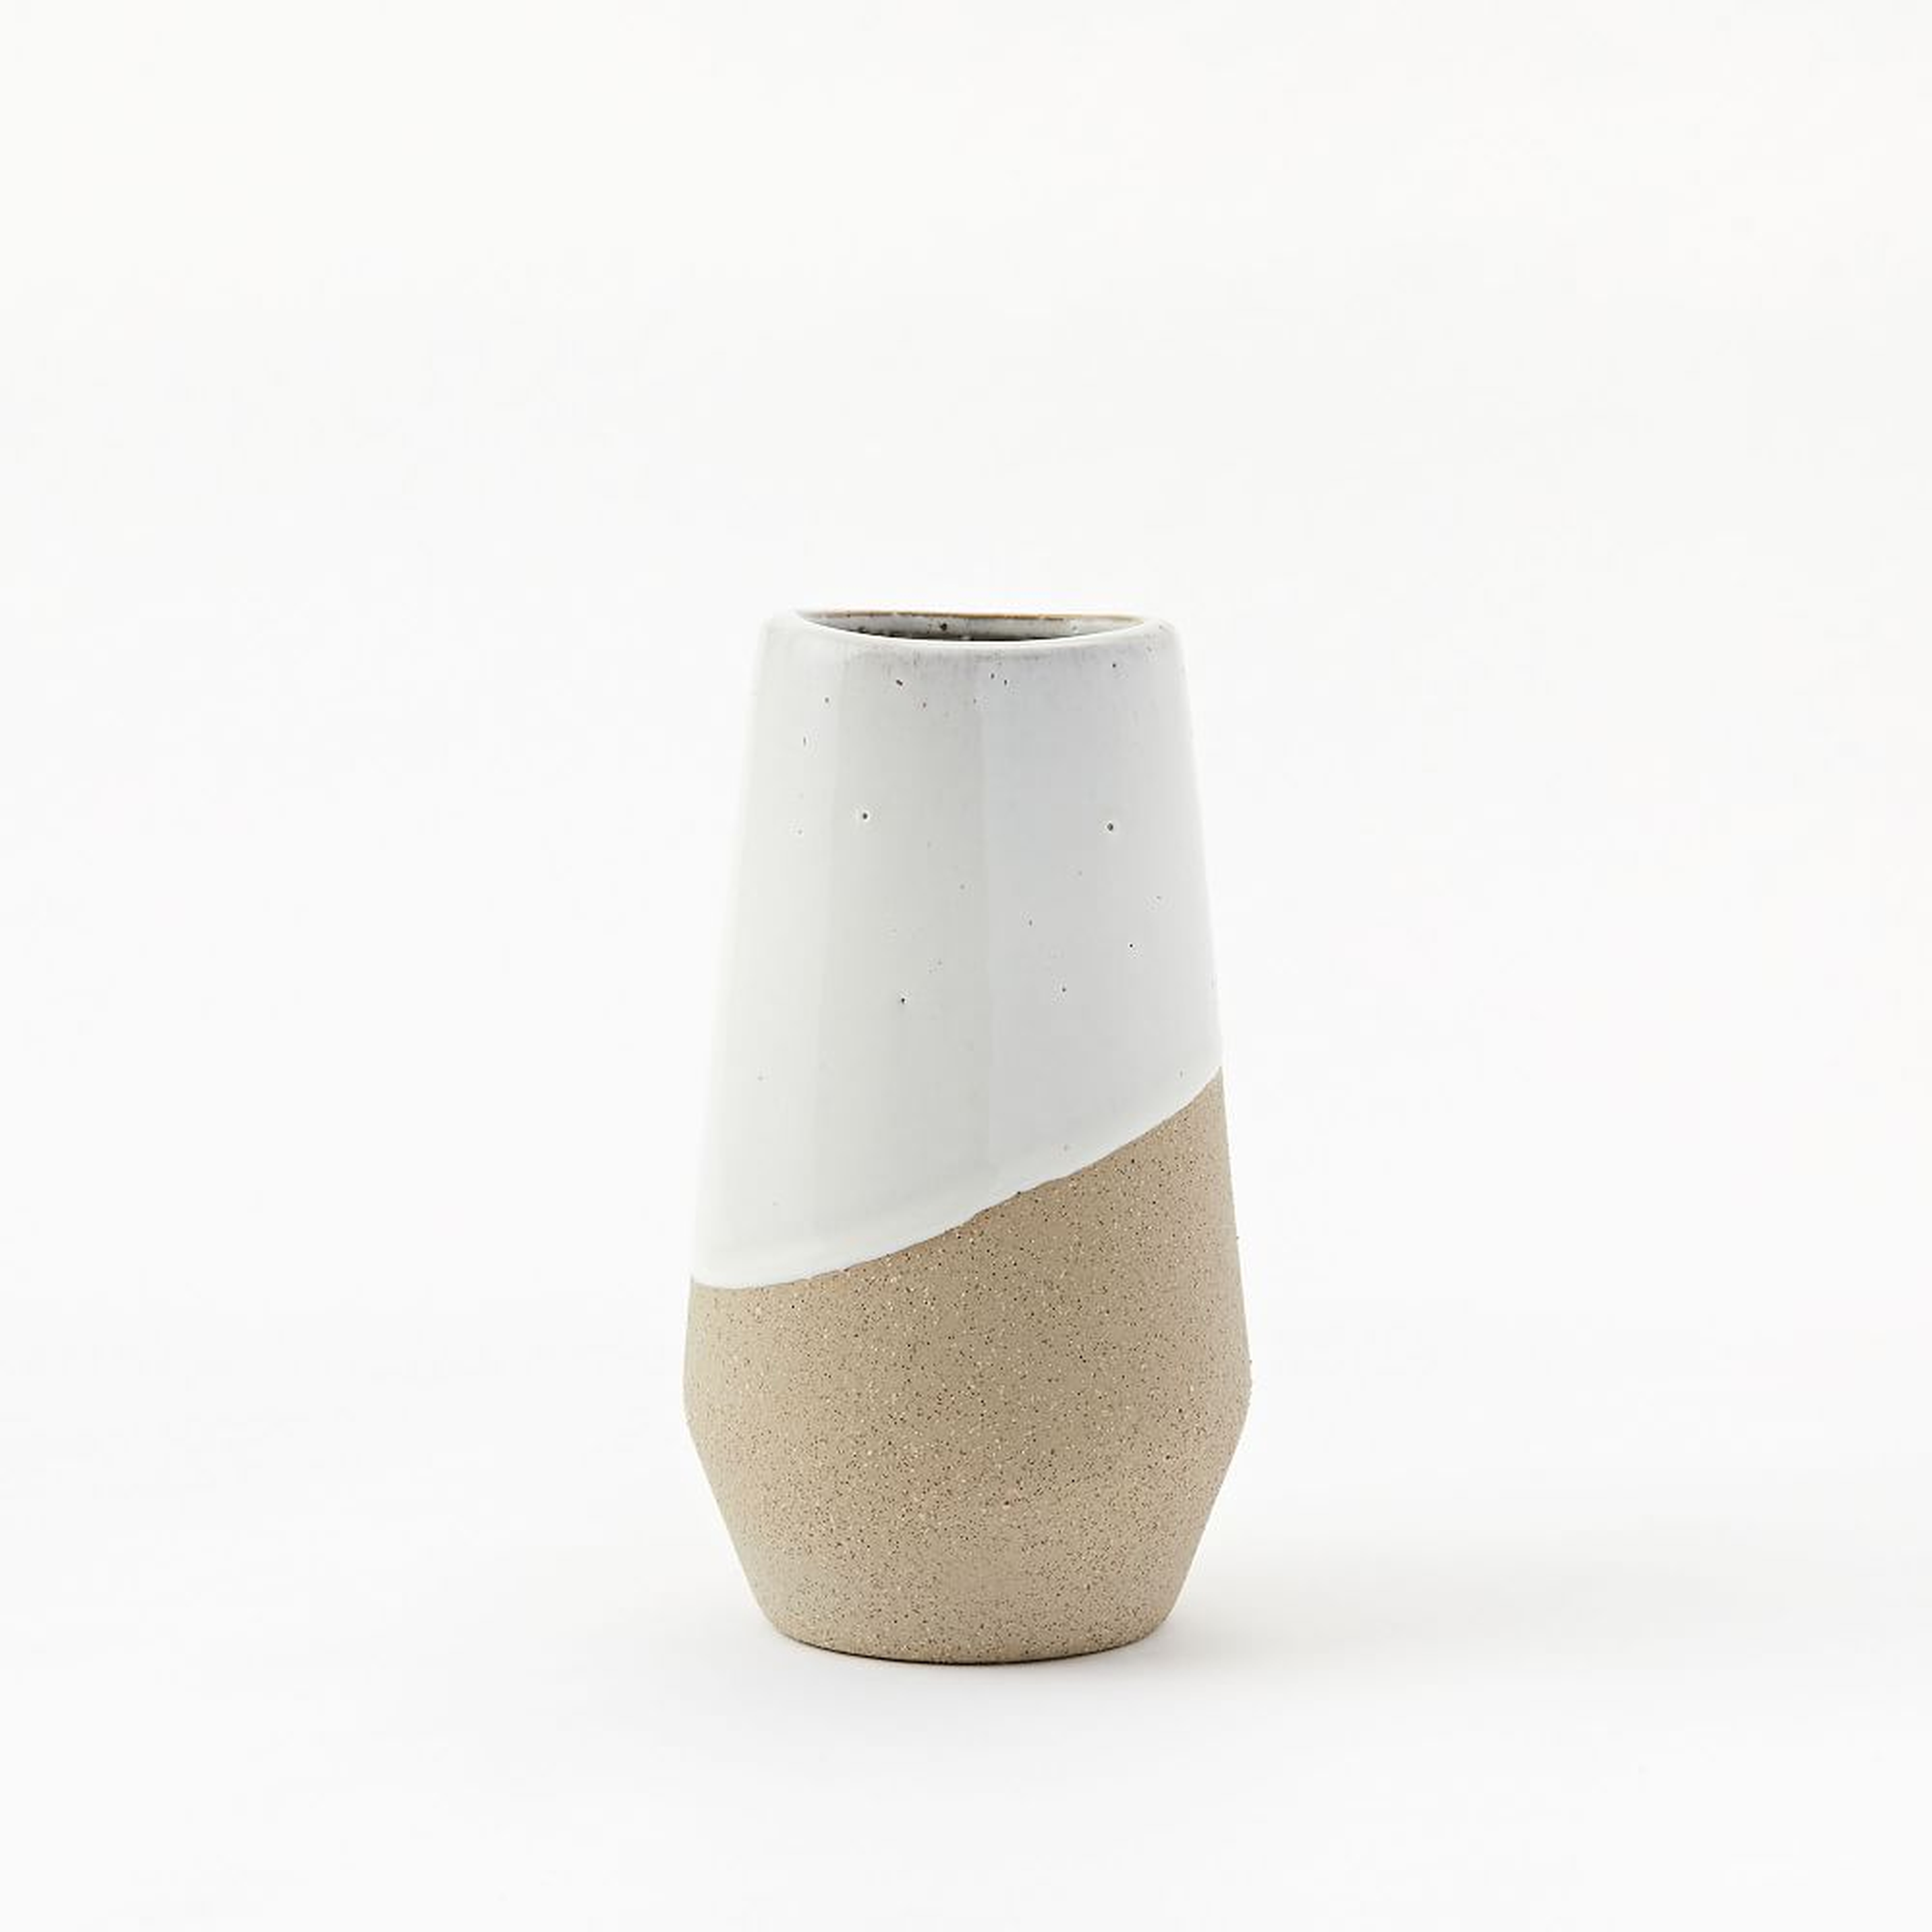 Half-Dipped Stoneware Vase, Gray/White, Medium Skinny, 7.5" - West Elm